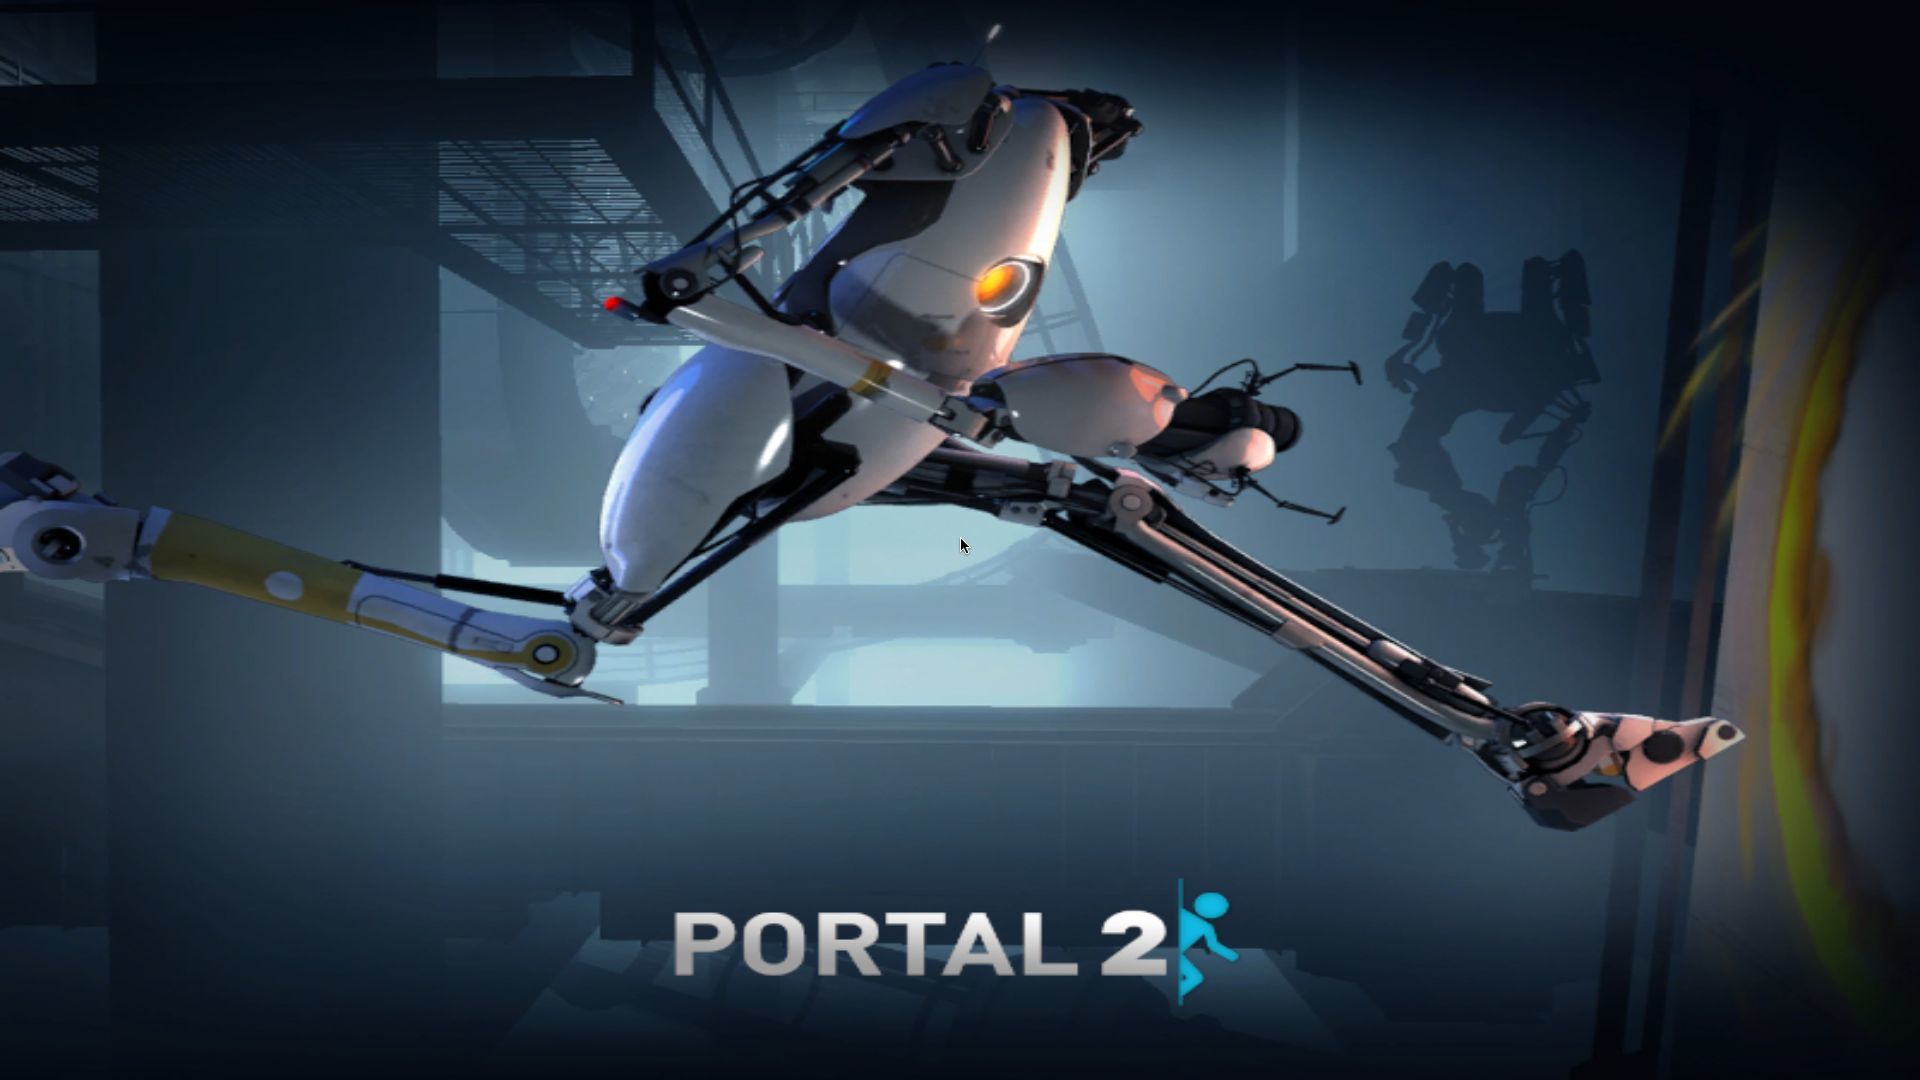 Portal 2 (Platinum Hits) - Xbox 360 Game